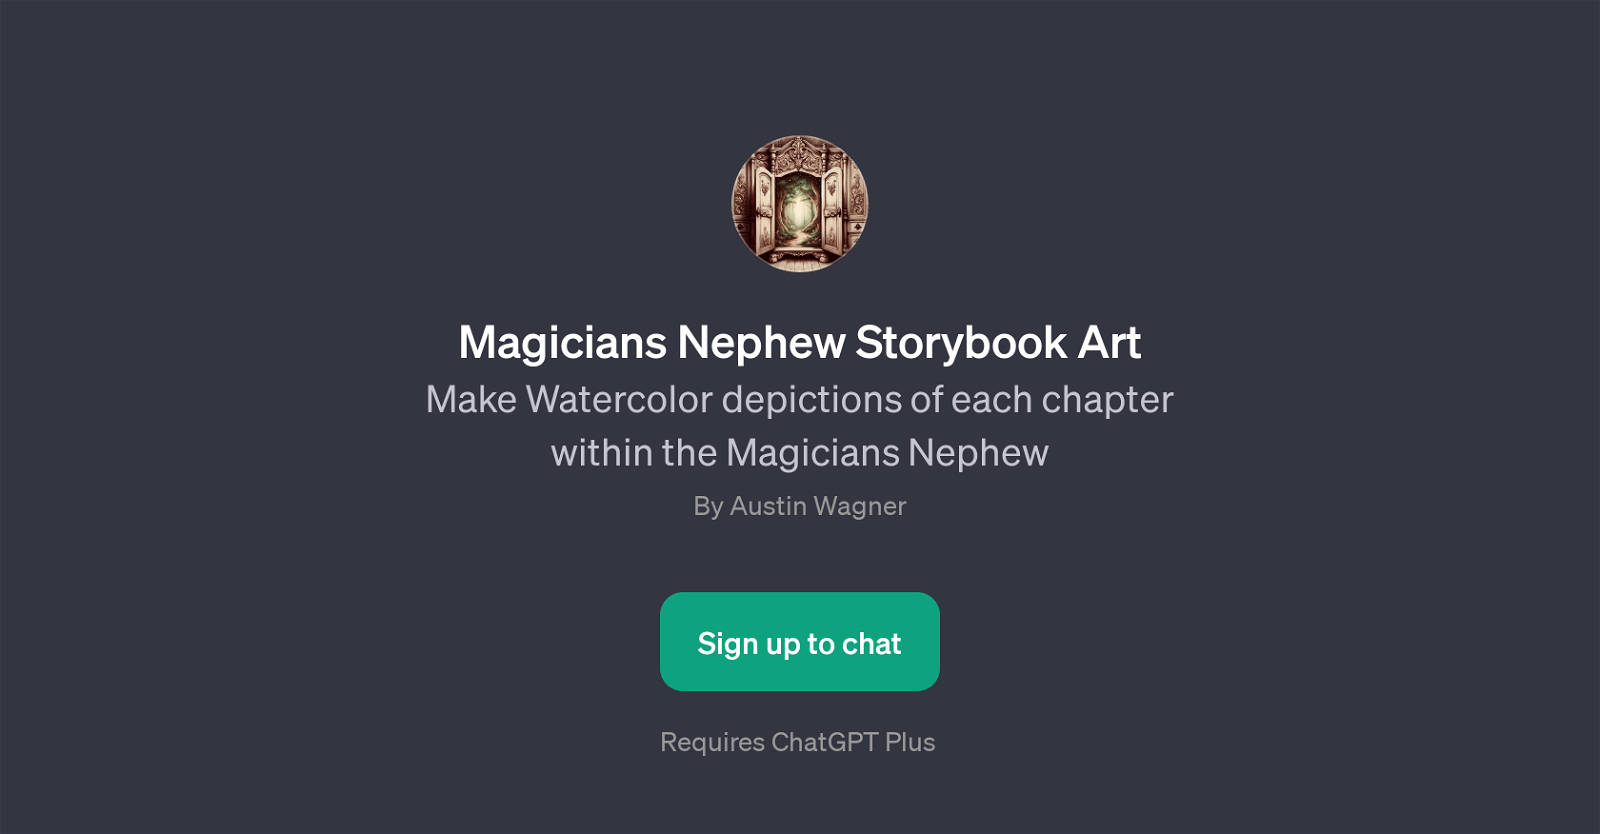 Magicians Nephew Storybook Art website